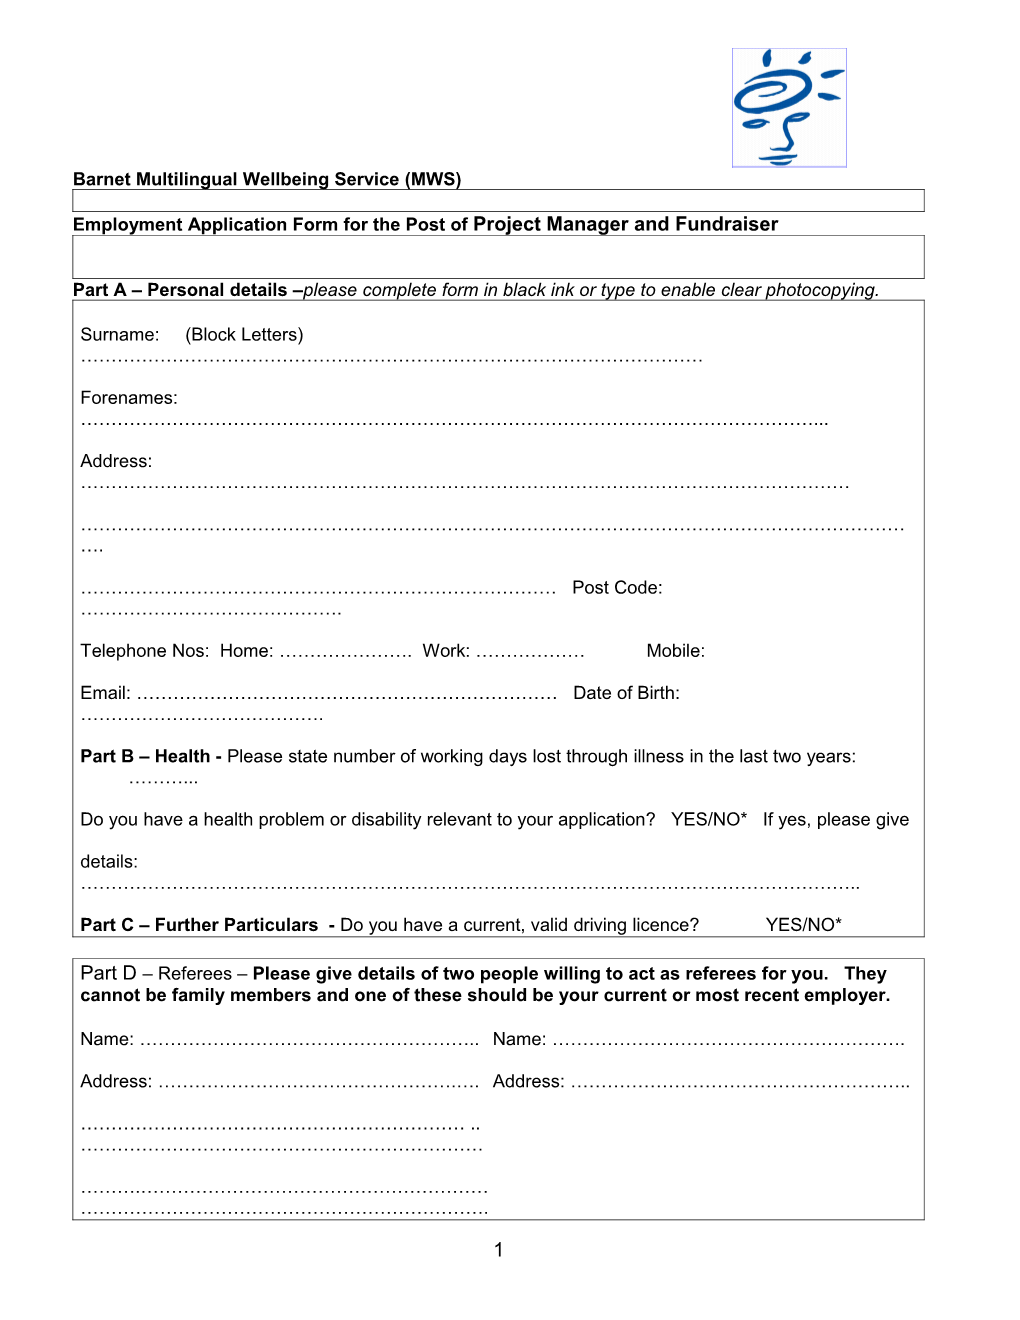 BRS Application Form